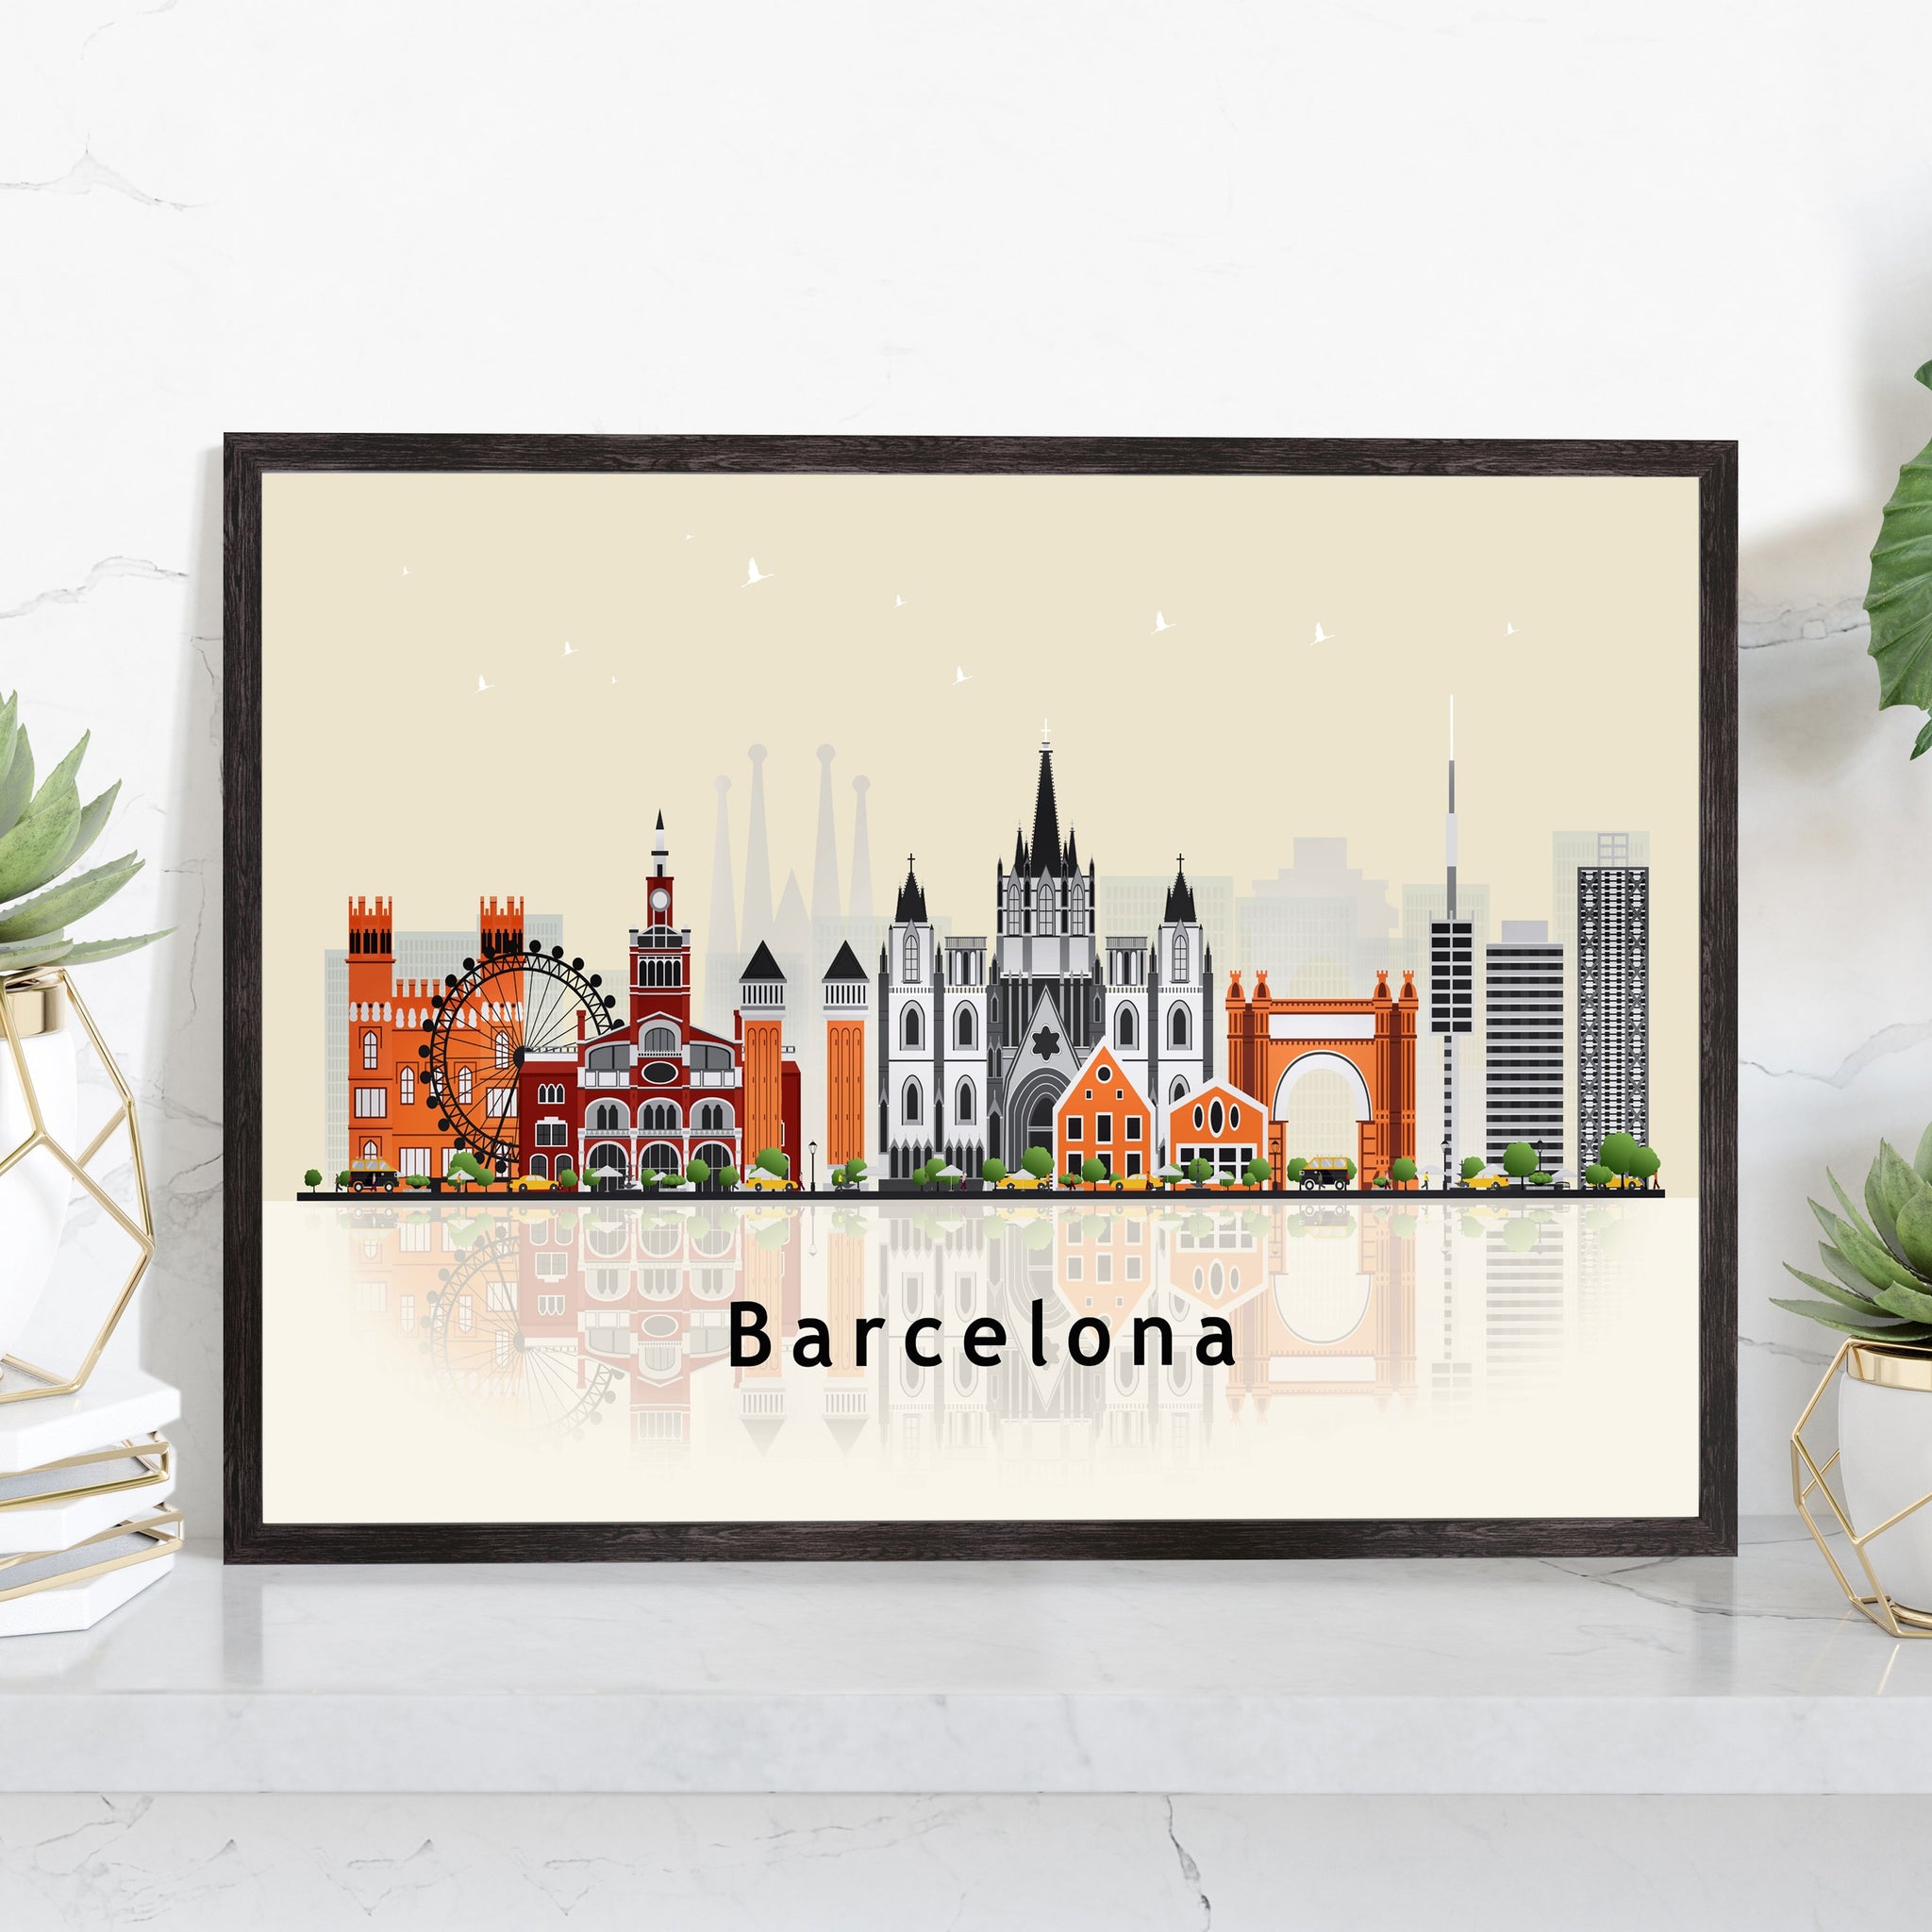 BARCELONA SPAIN Illustration skyline poster, Barcelona modern skyline cityscape poster print, Landmark map poster, Home wall art decoration